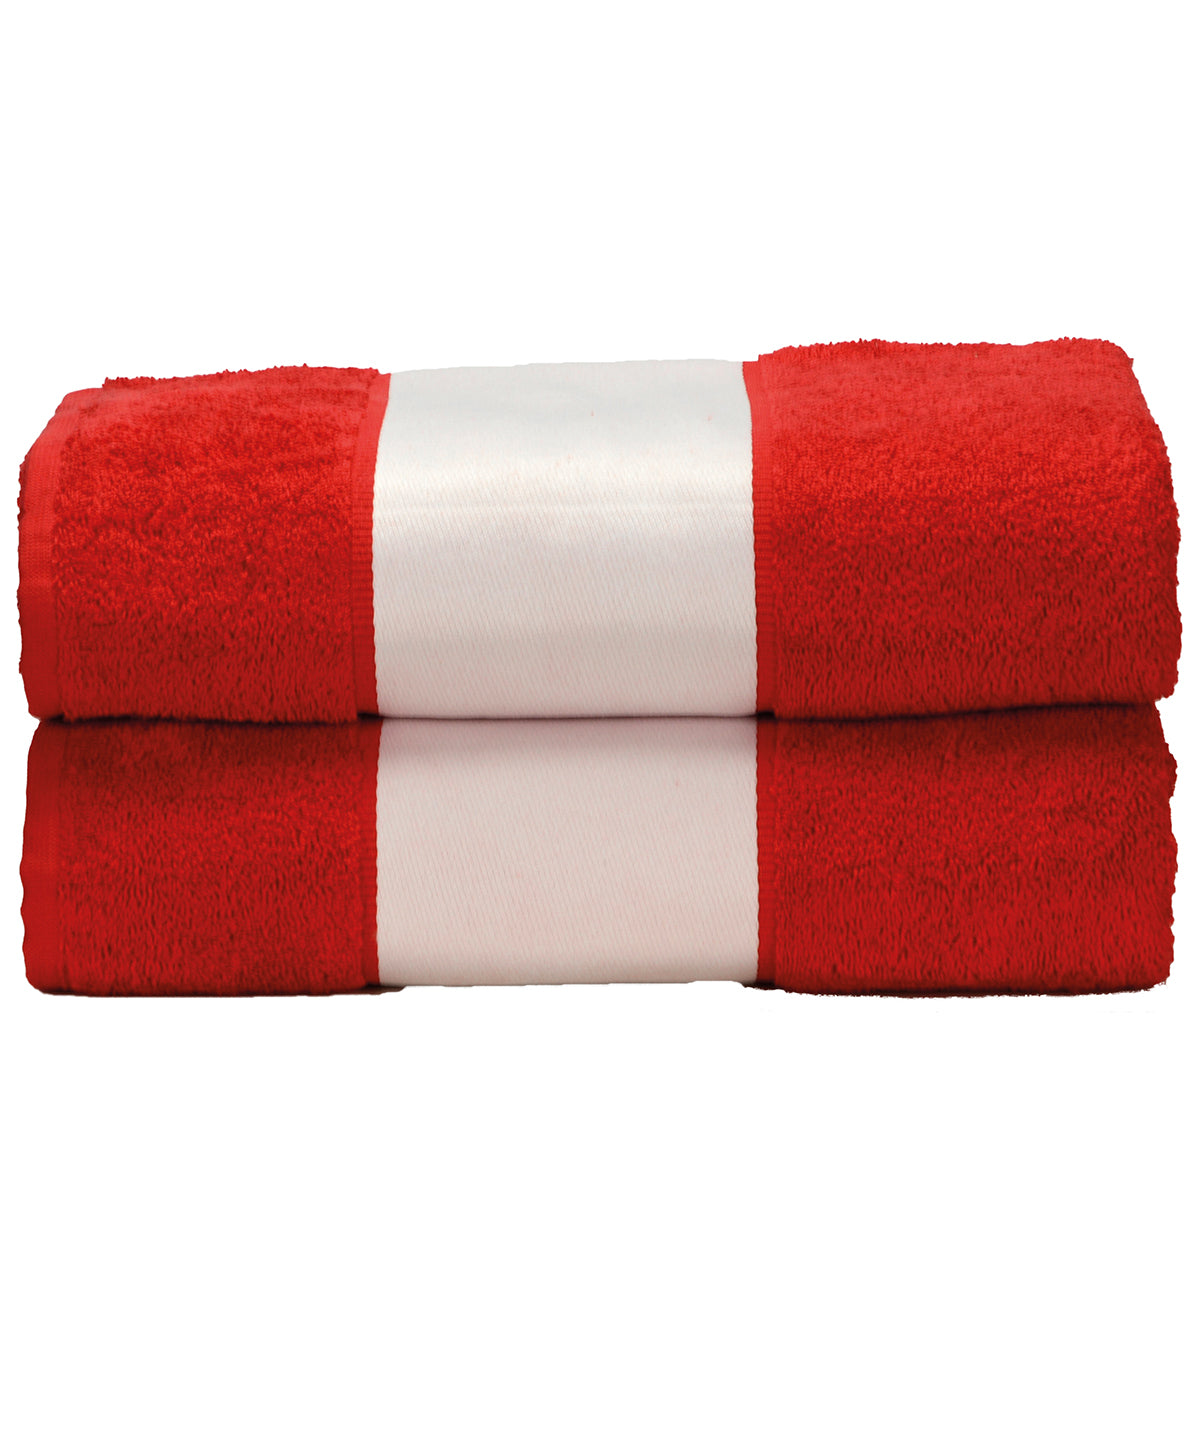 Personalised Towels - Mid Red A&R Towels ARTG® SUBLI-Me® bath towel